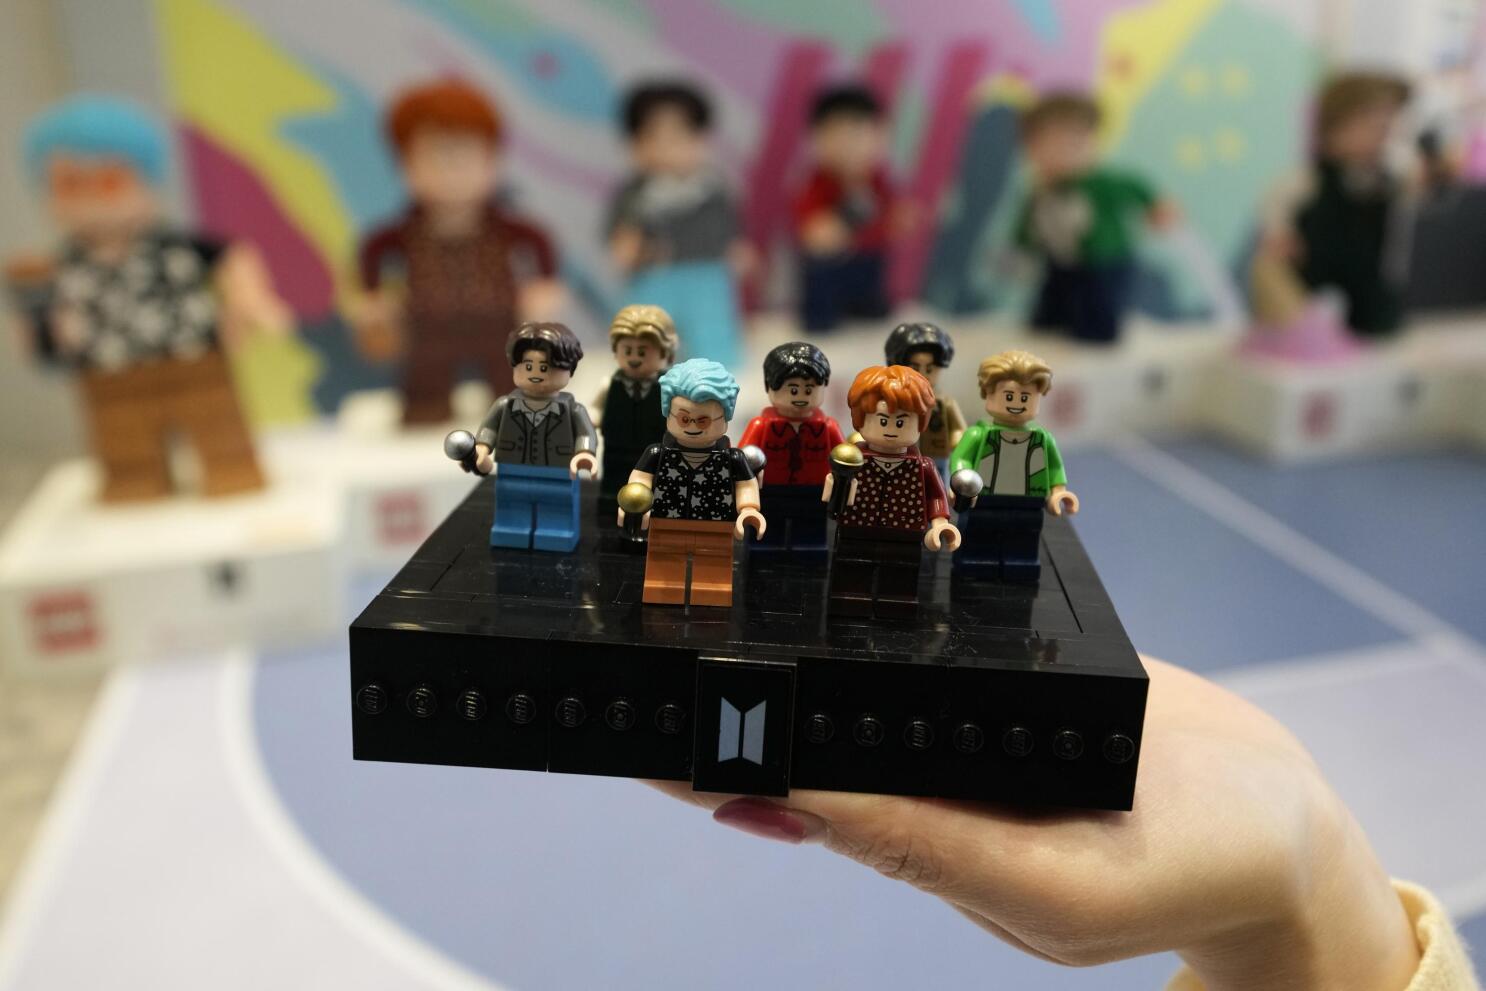 Lego Market Py (@legomarketpy) • Instagram photos and videos